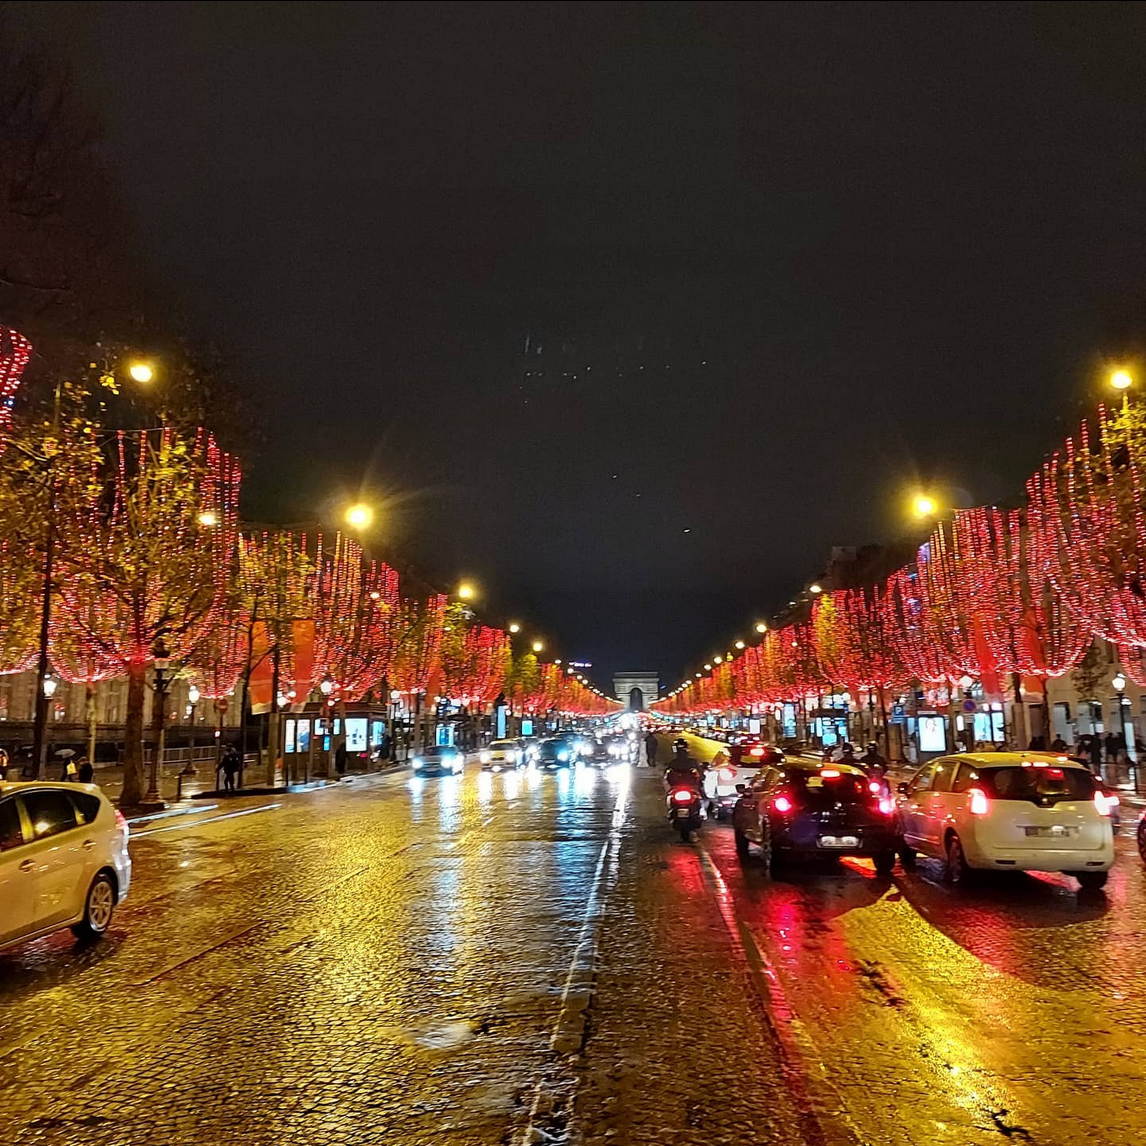 Christmas tree in Paris France 